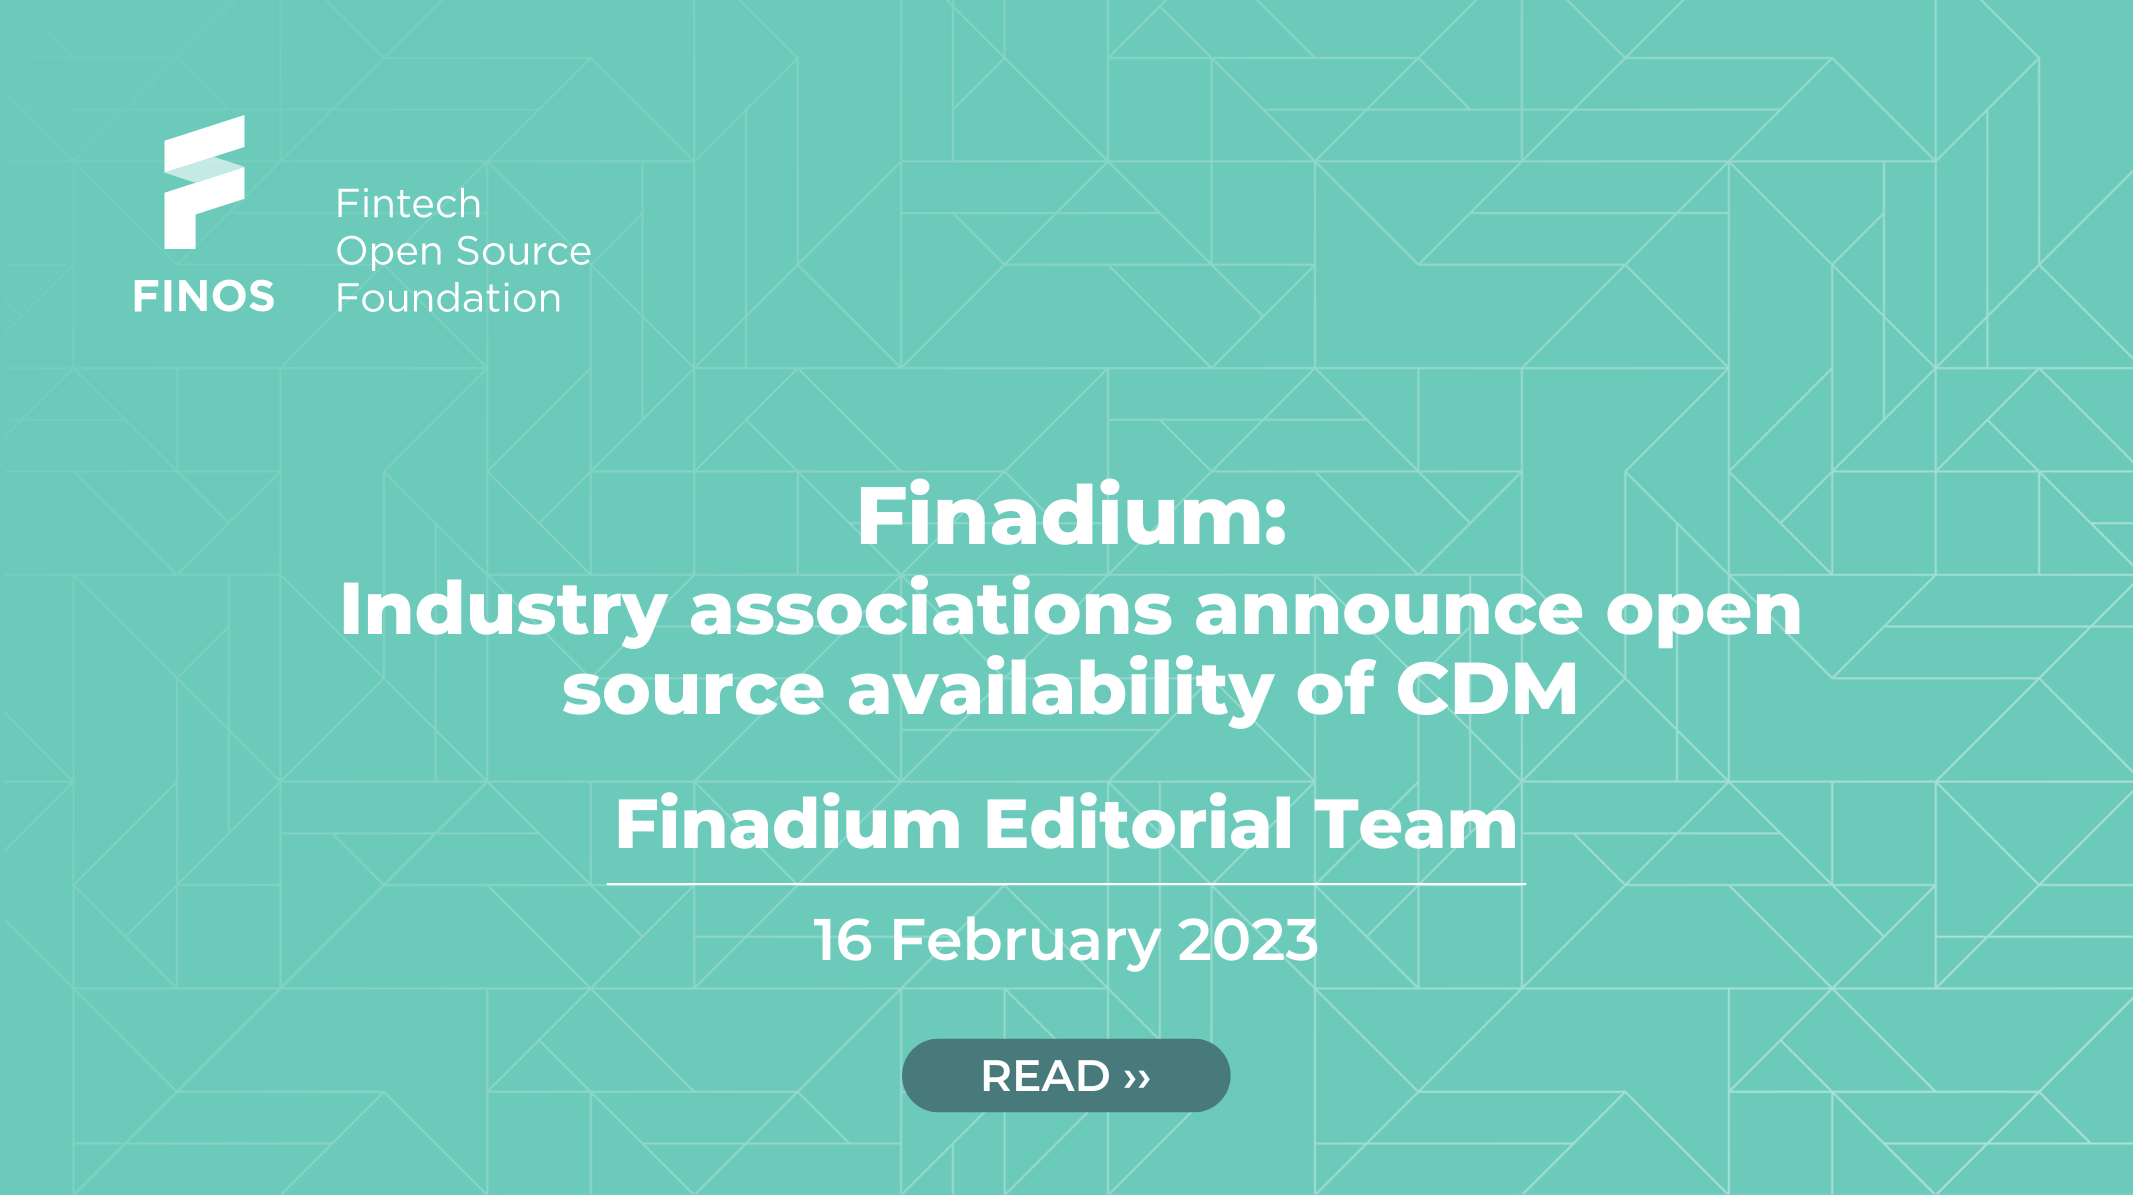 Finadium: Industry associations announce open source availability of CDM